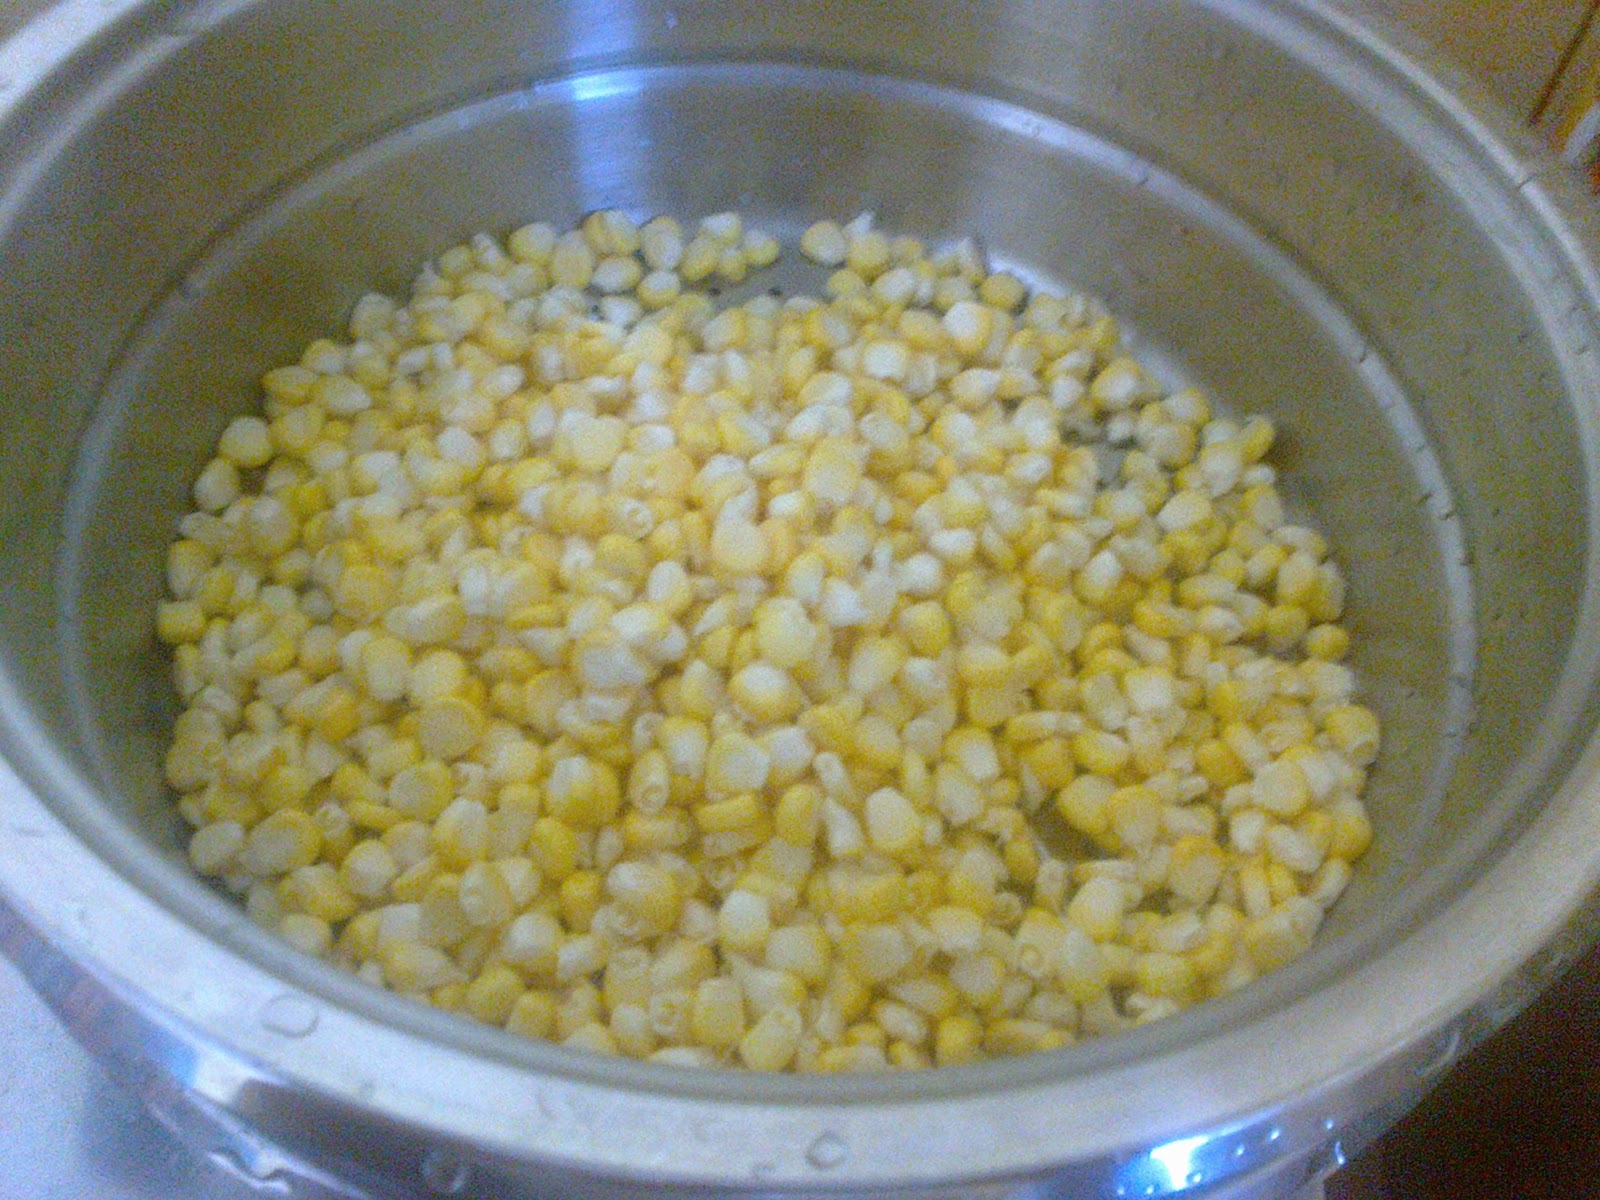 Teratak Resepi Ummi: Sweet Corn in Cup